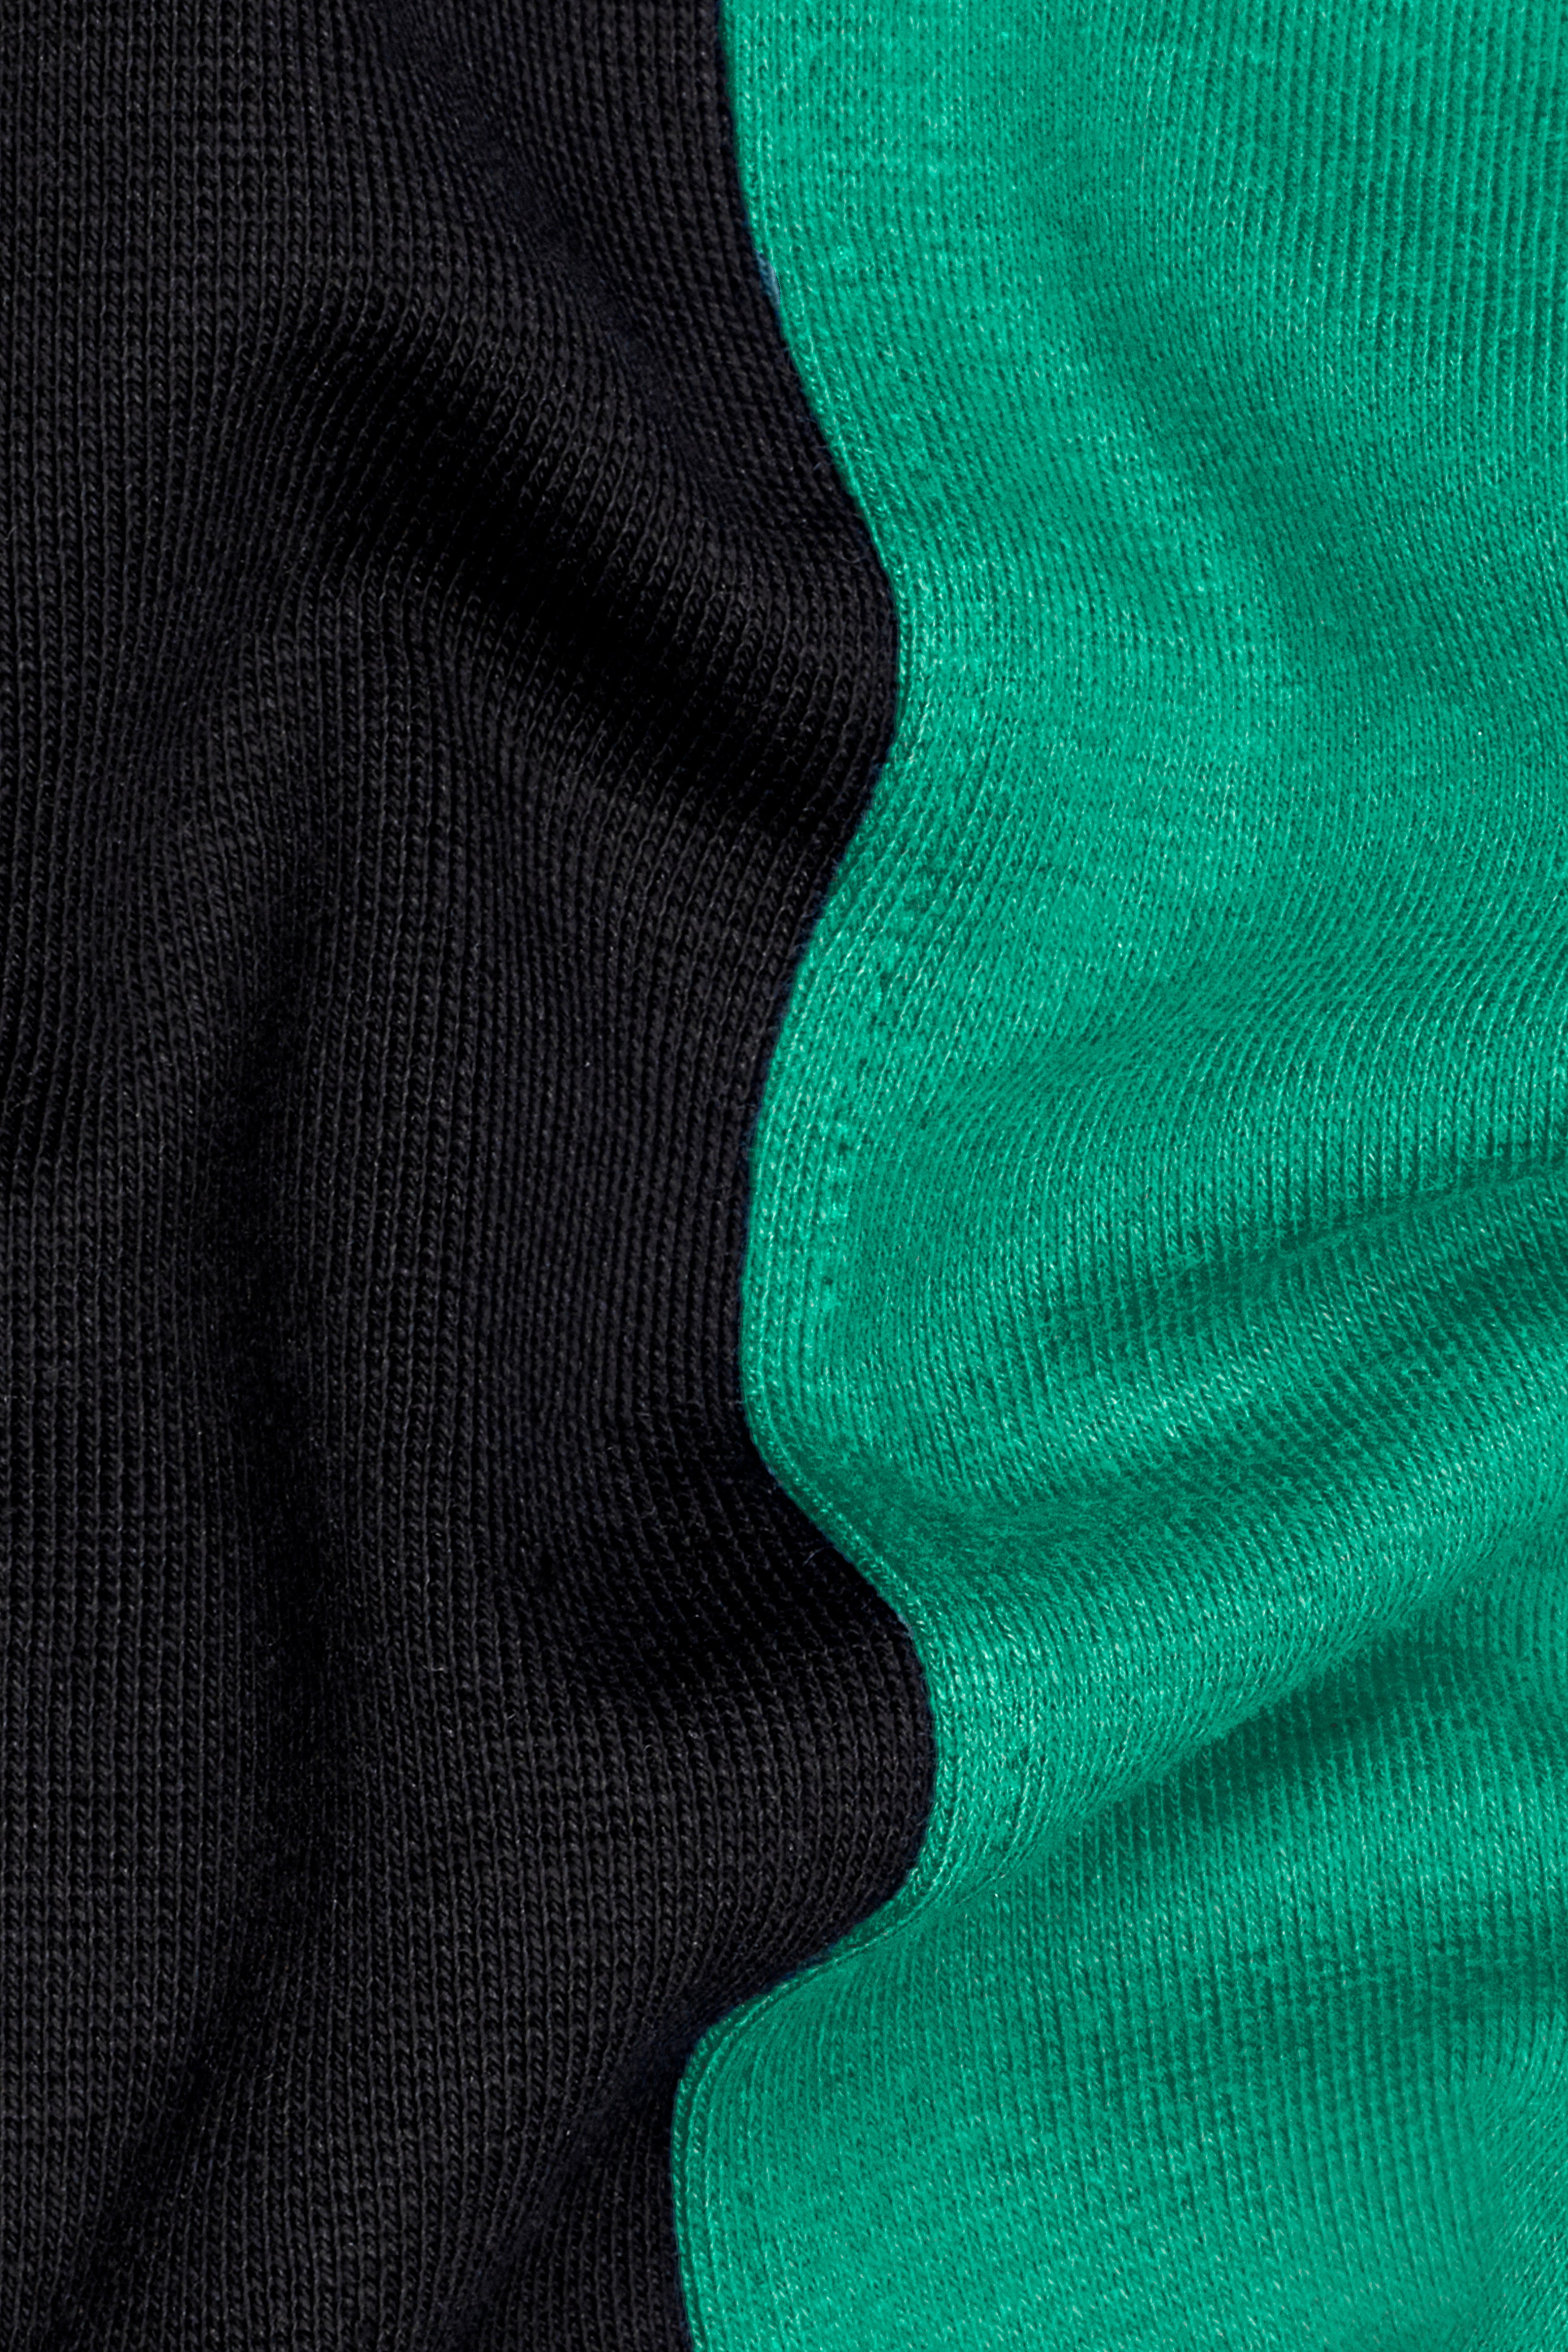 Mountain Meadow Green and Black Premium Cotton Jersey T-Shirt TS911-S, TS911-M, TS911-L, TS911-XL, TS911-XXL